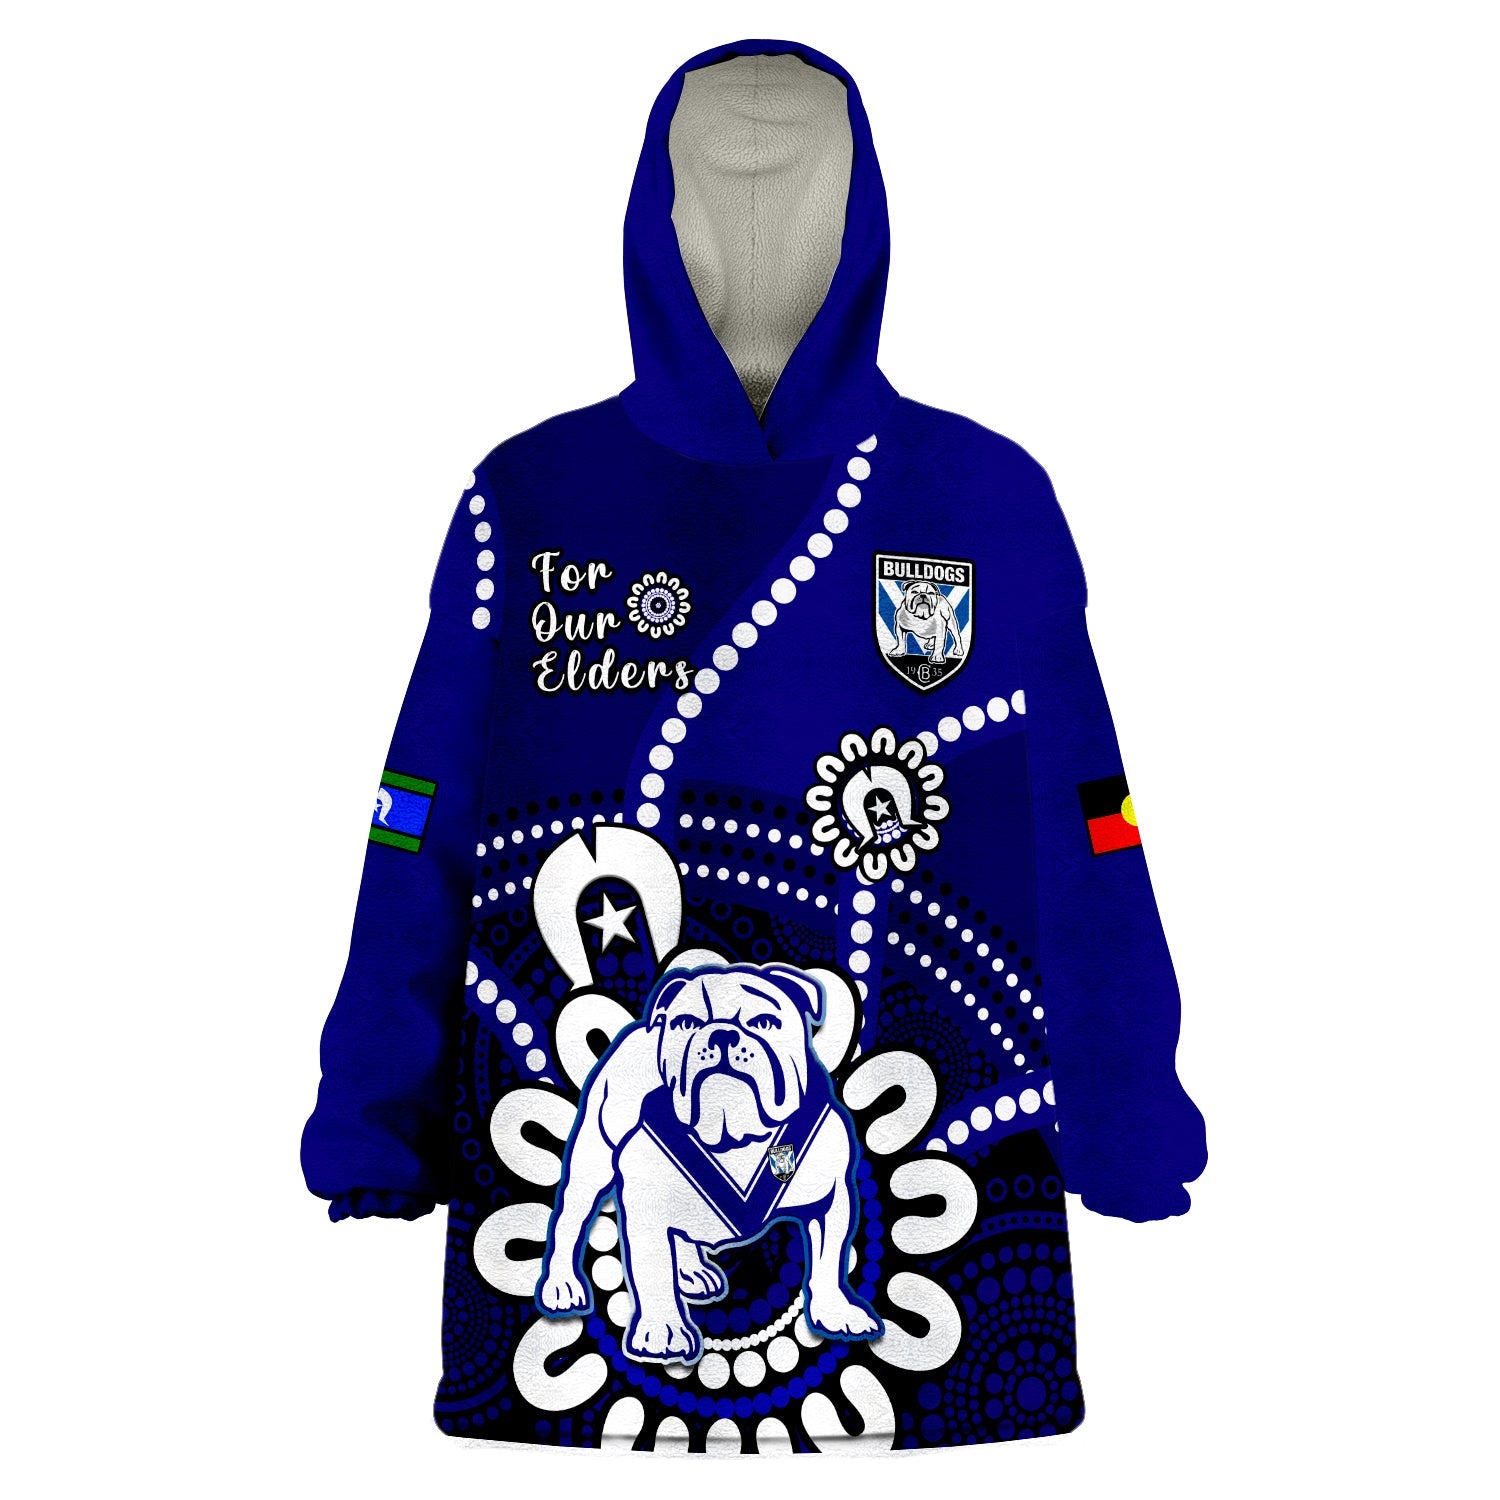 bulldogs-rugby-naidoc-2023-wearable-blanket-hoodie-for-our-elders-aboriginal